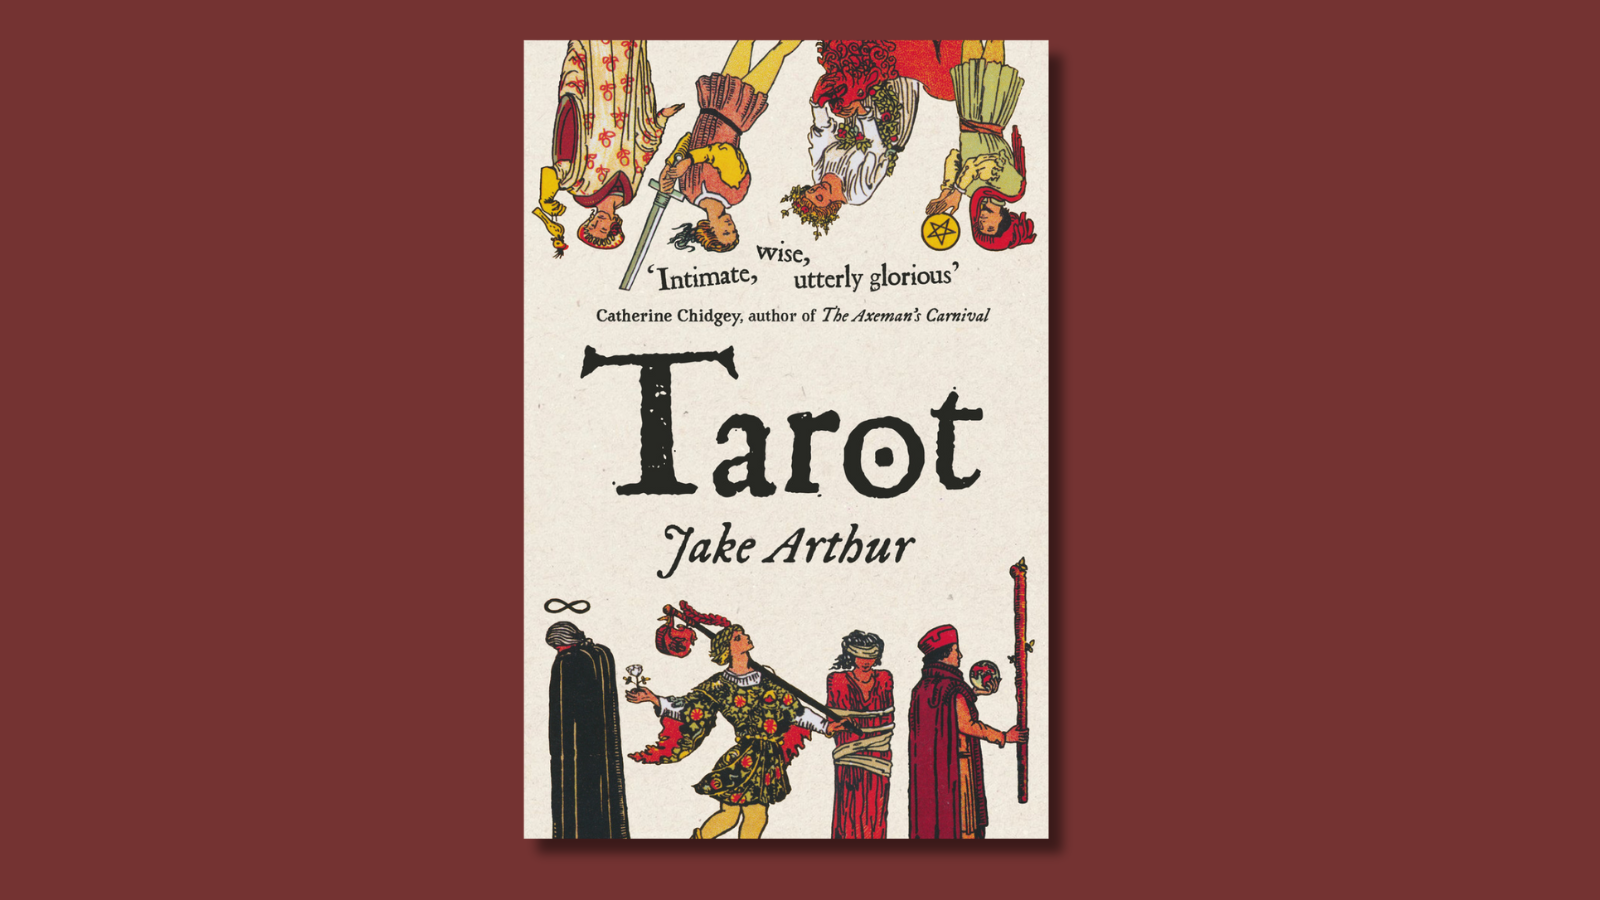 Tarot by Jake Arthur